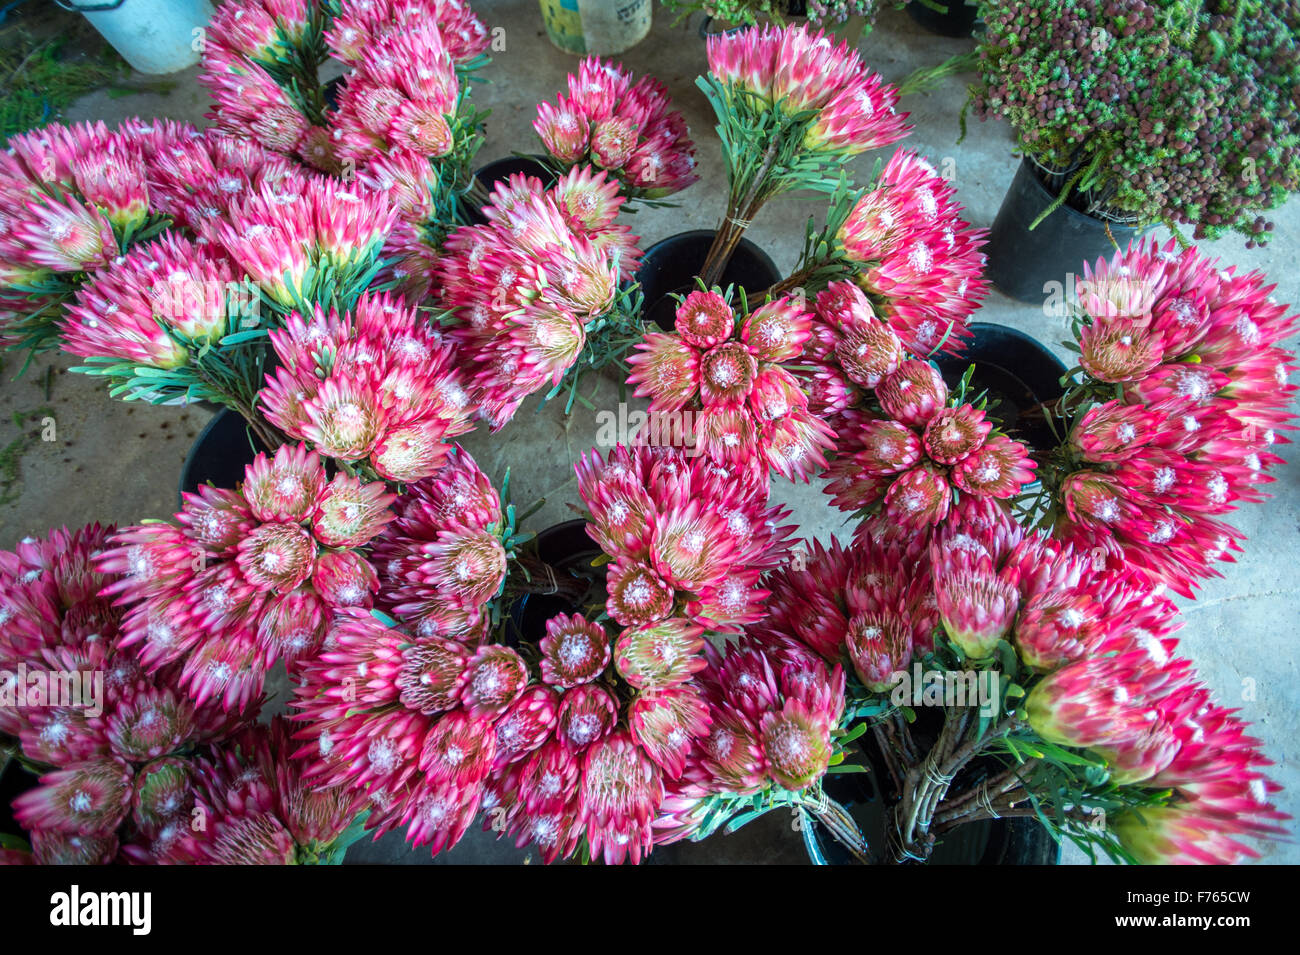 Sud Africa - Dettaglio del "Doornkraal" Protea pianta flowering. Foto Stock